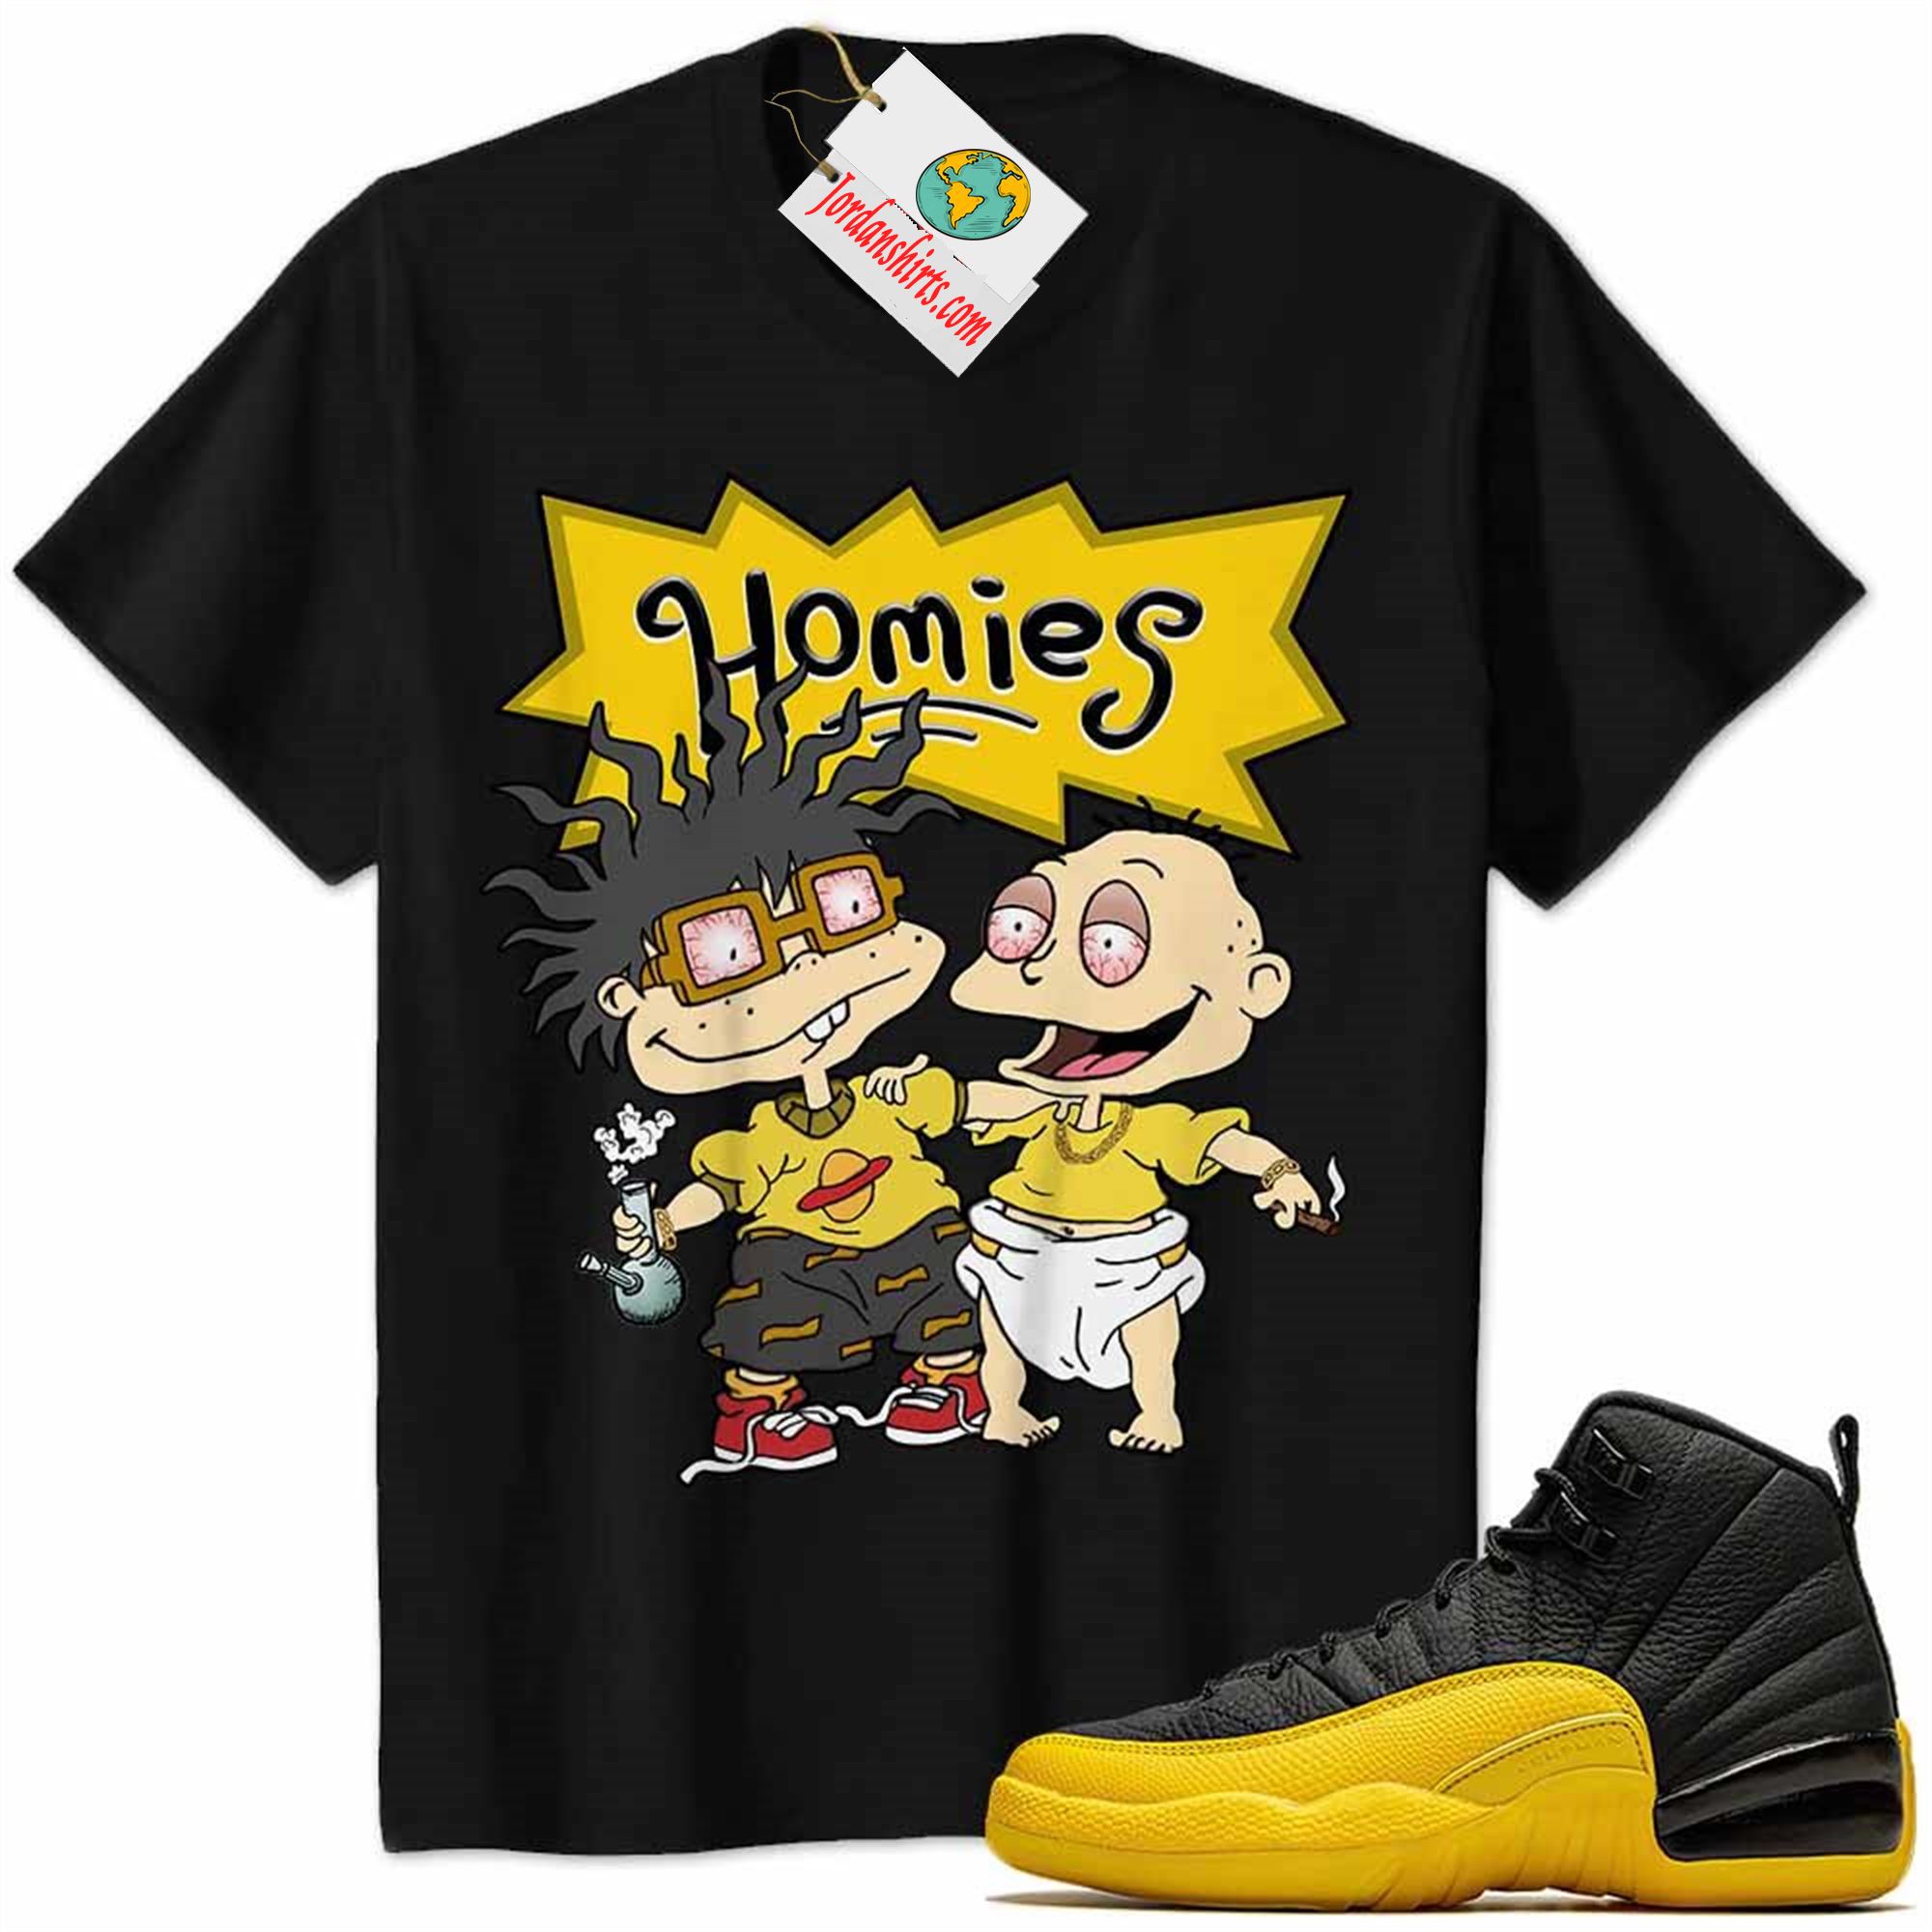 Jordan 12 Shirt, Jordan 12 University Gold Shirt Hommies Tommy Pickles Chuckie Finster Rugrats Black Full Size Up To 5xl